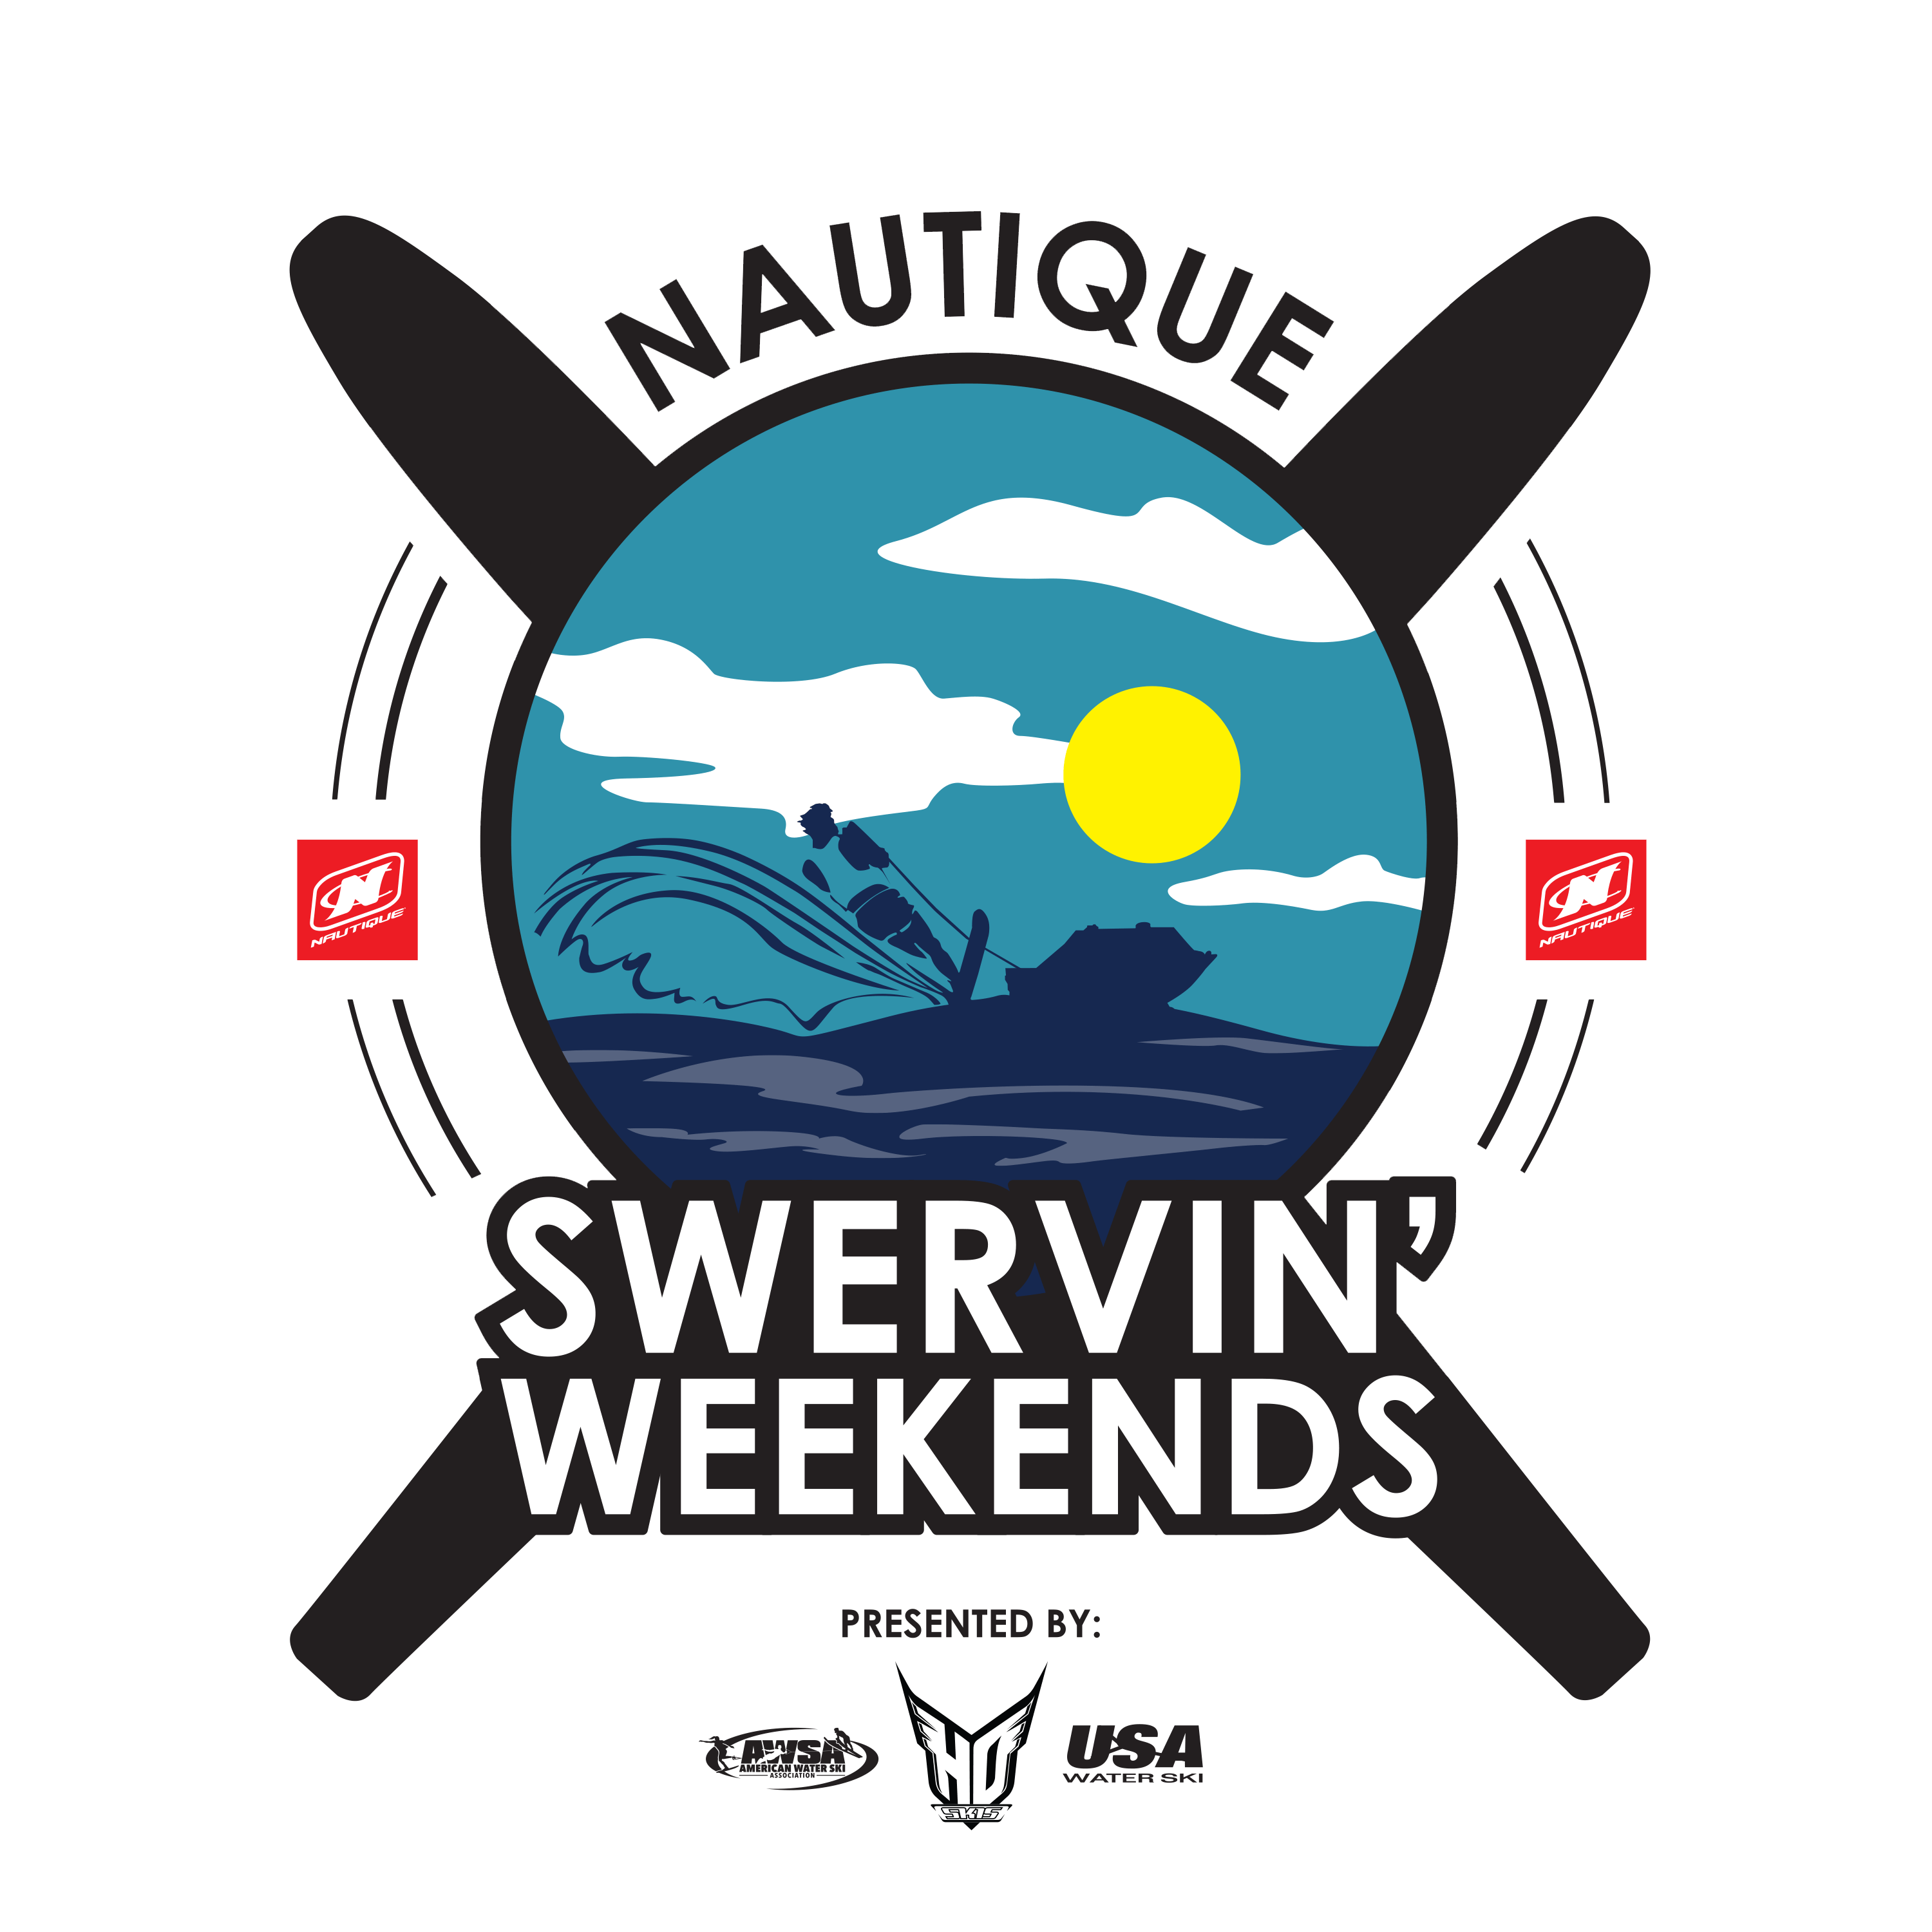 Nautique Logo - INTRODUCING NAUTIQUE SWERVIN' WEEKENDS!